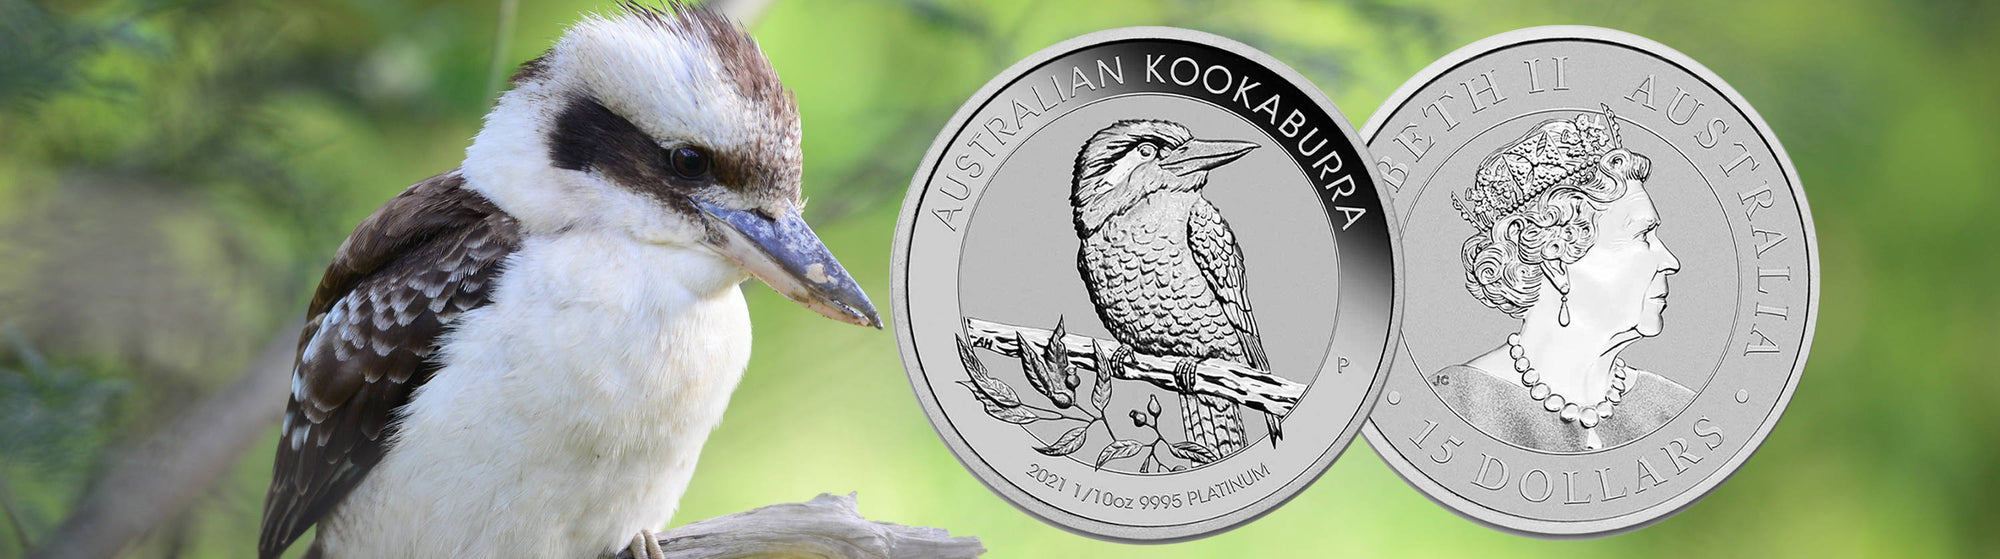 2021 1/10 oz Platinum Kookaburras - The Inaugural Year for this Flagship Coin